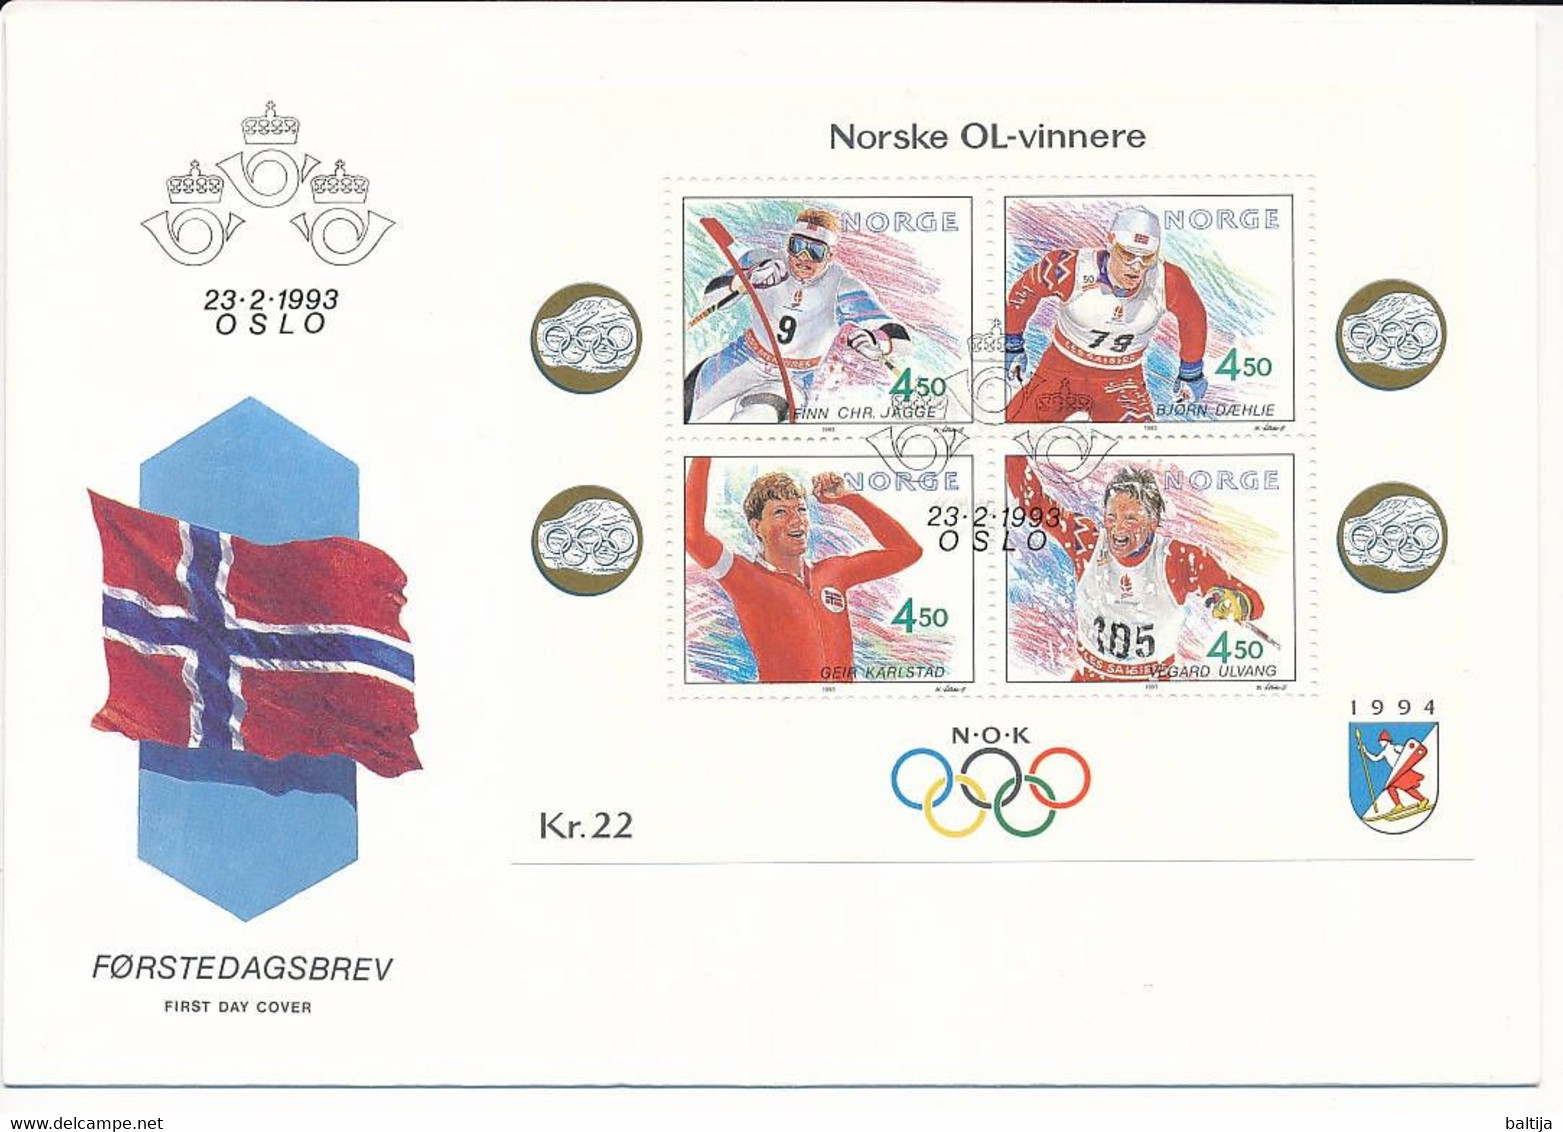 Mi Block 19 FDC / Winter Olympics Lillehammer '94, Historical Norwegian Gold Medalists  - 23 February 1993 - FDC